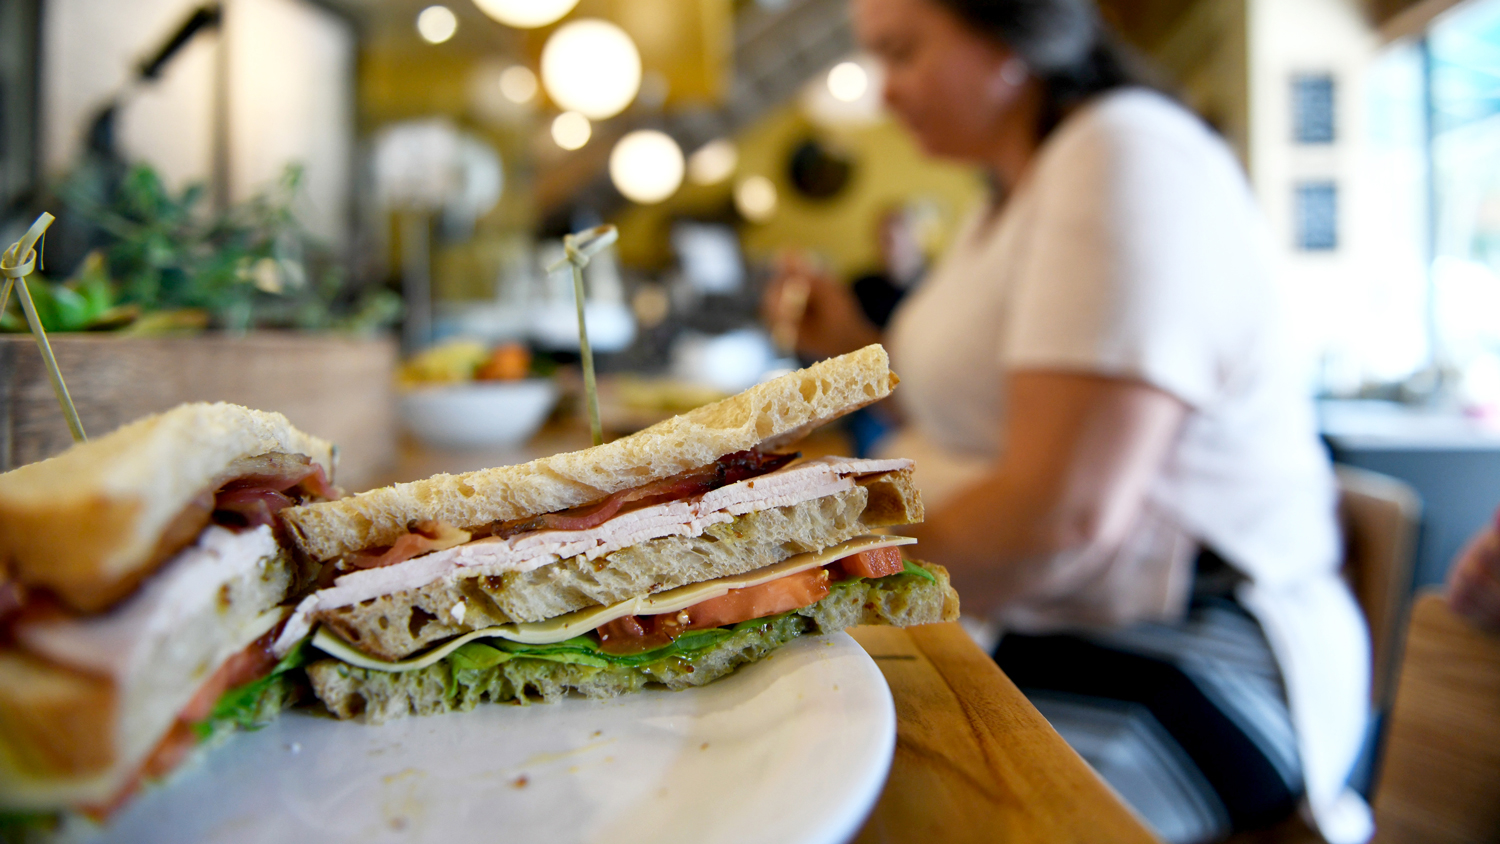 Sandwich sitting on plate